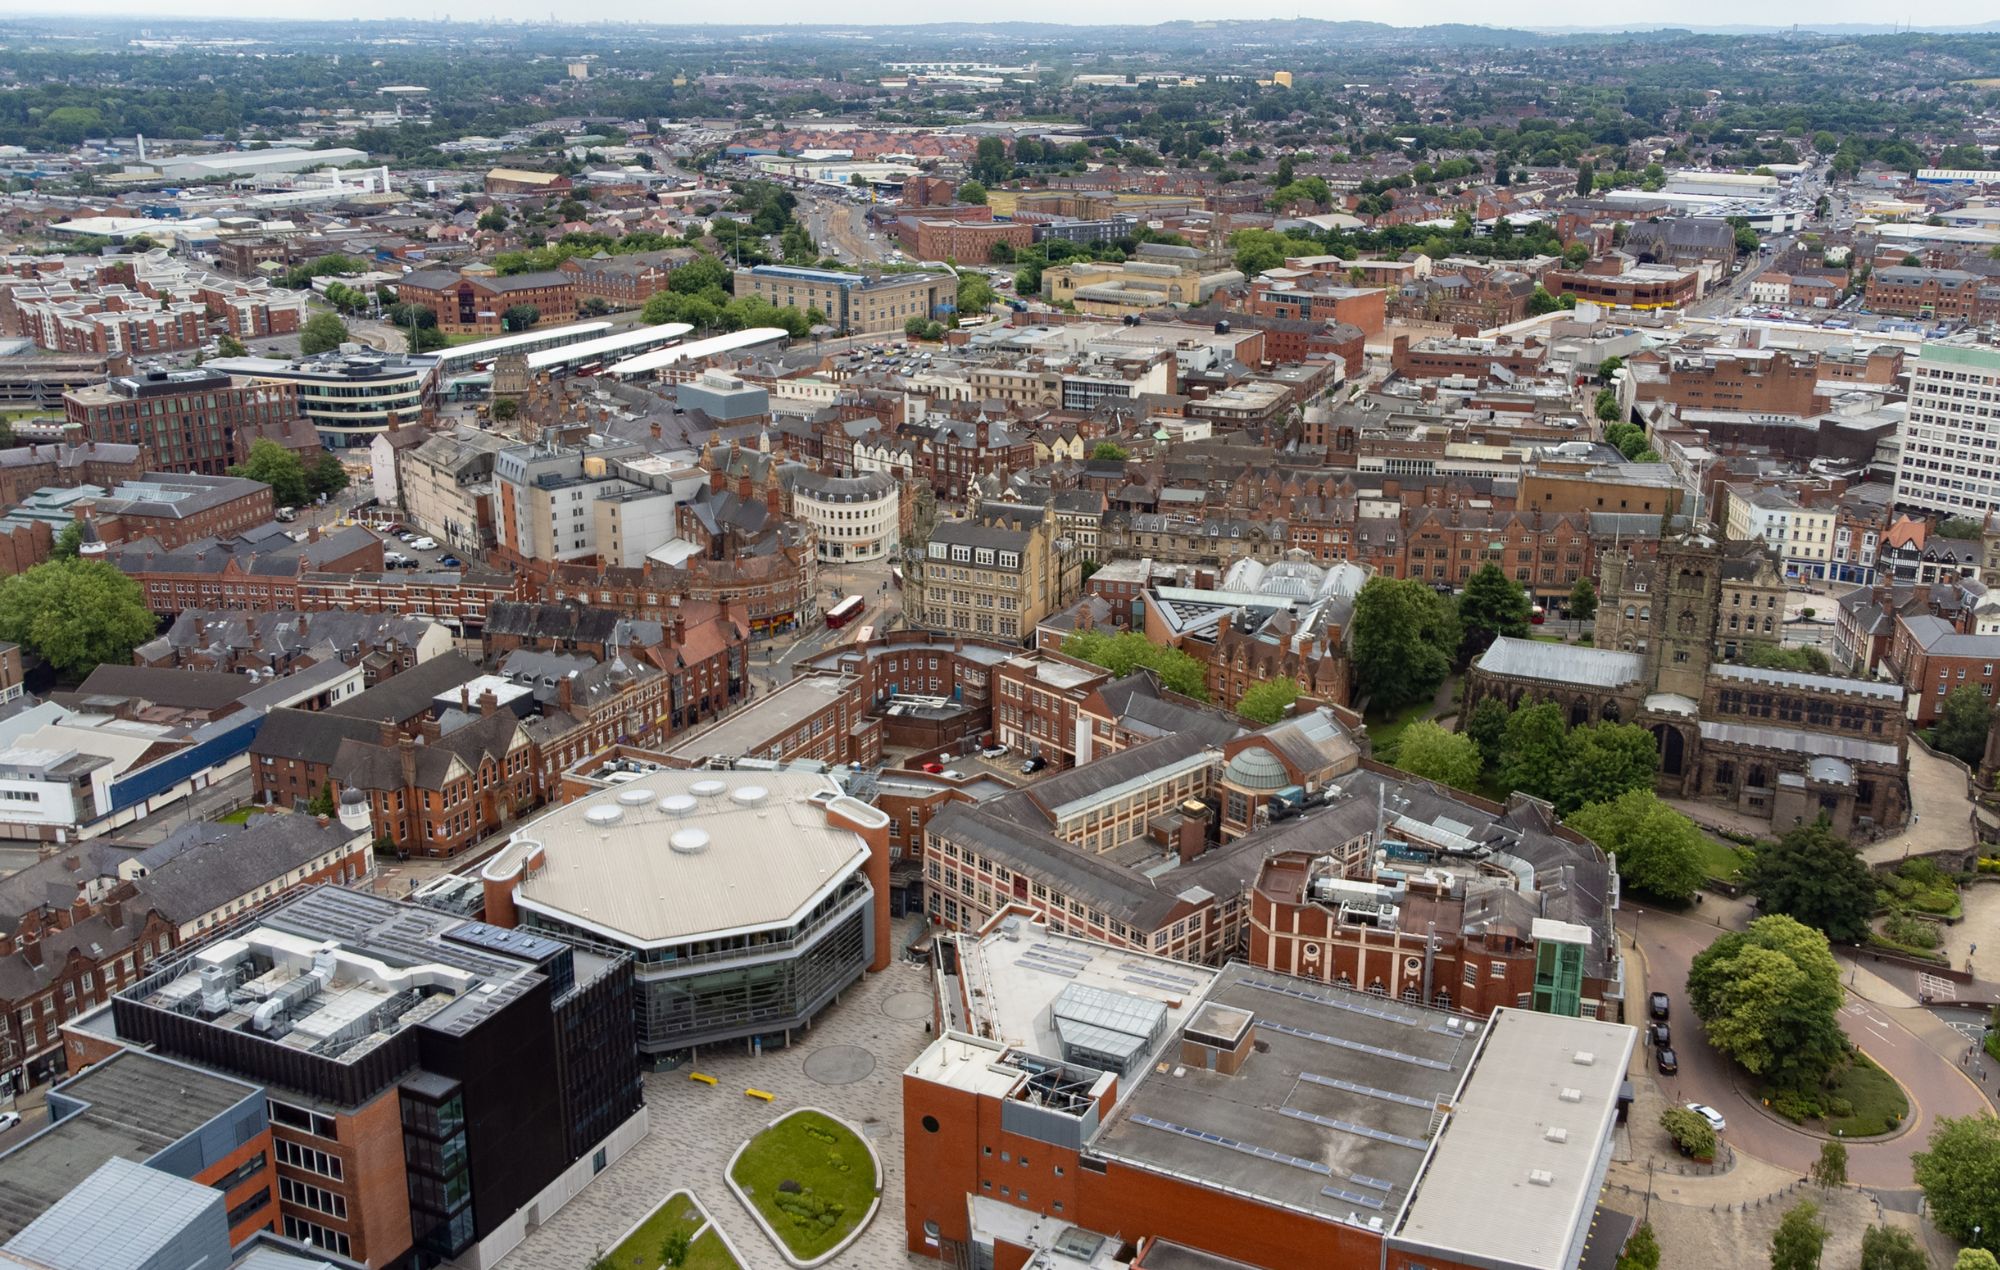 Iconic Wolverhampton music venue renamed under university partnership